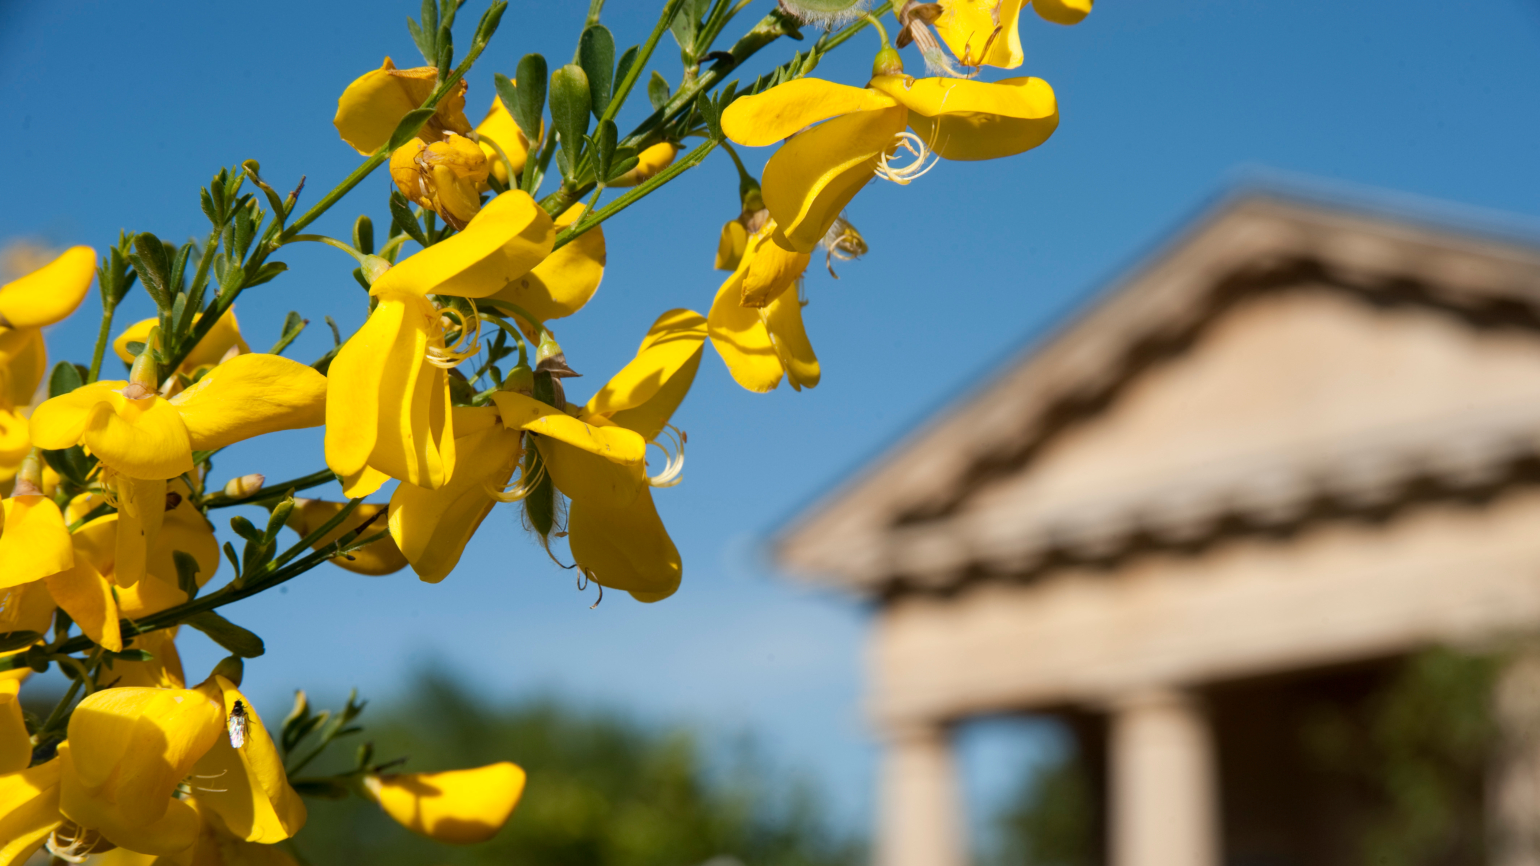 Yellow flowers against a blue sky in the Mediterranean Garden